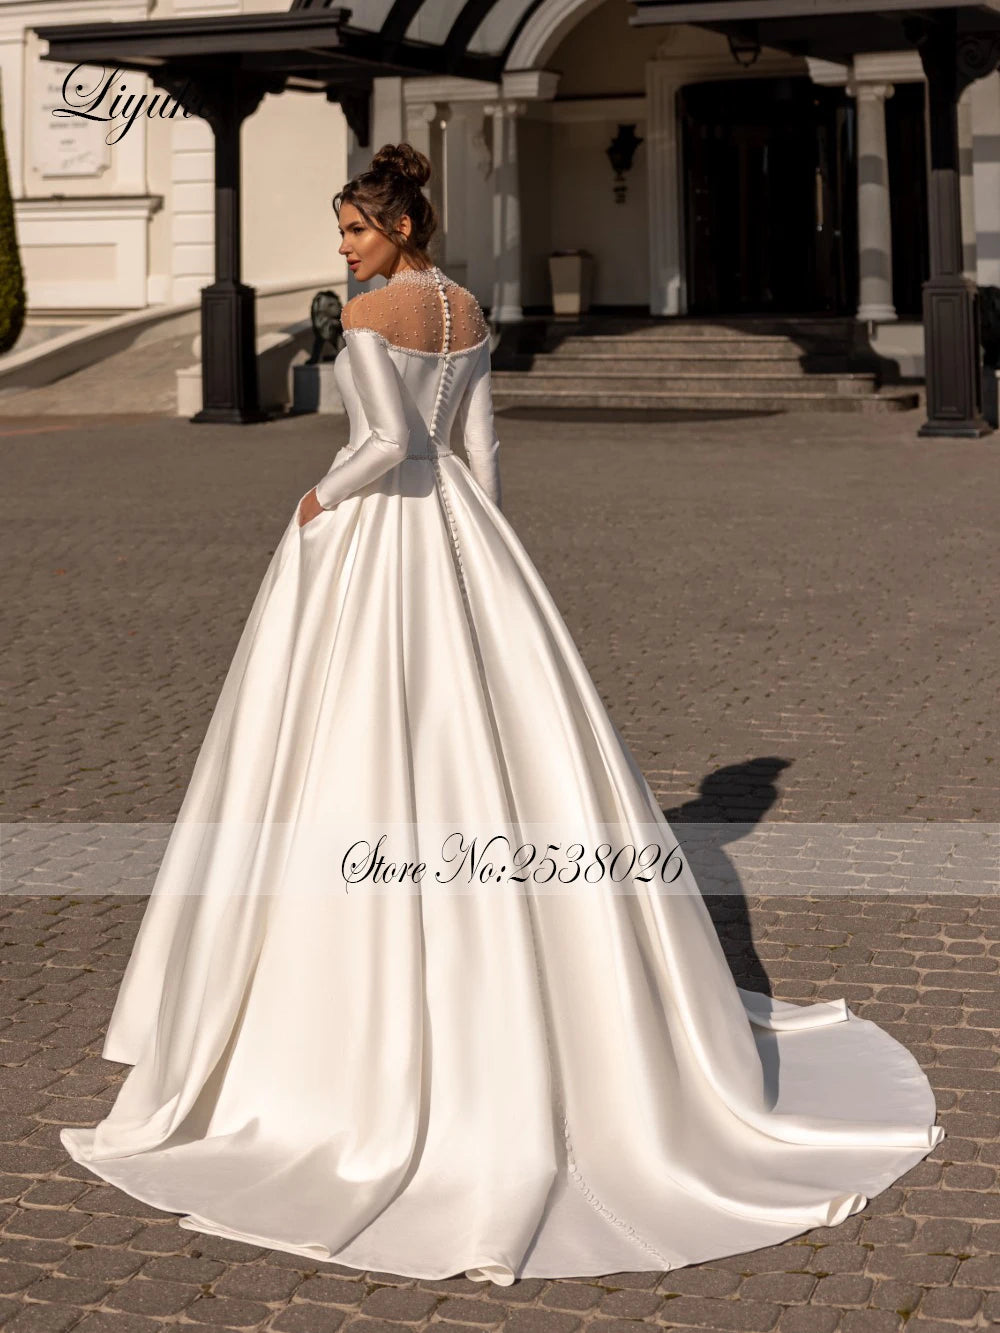 Liyuke Luxury Satin High Collar A-Line Bride Dress Full Sleeves Beading Pearls Of Neck Elegant Wedding Gowns